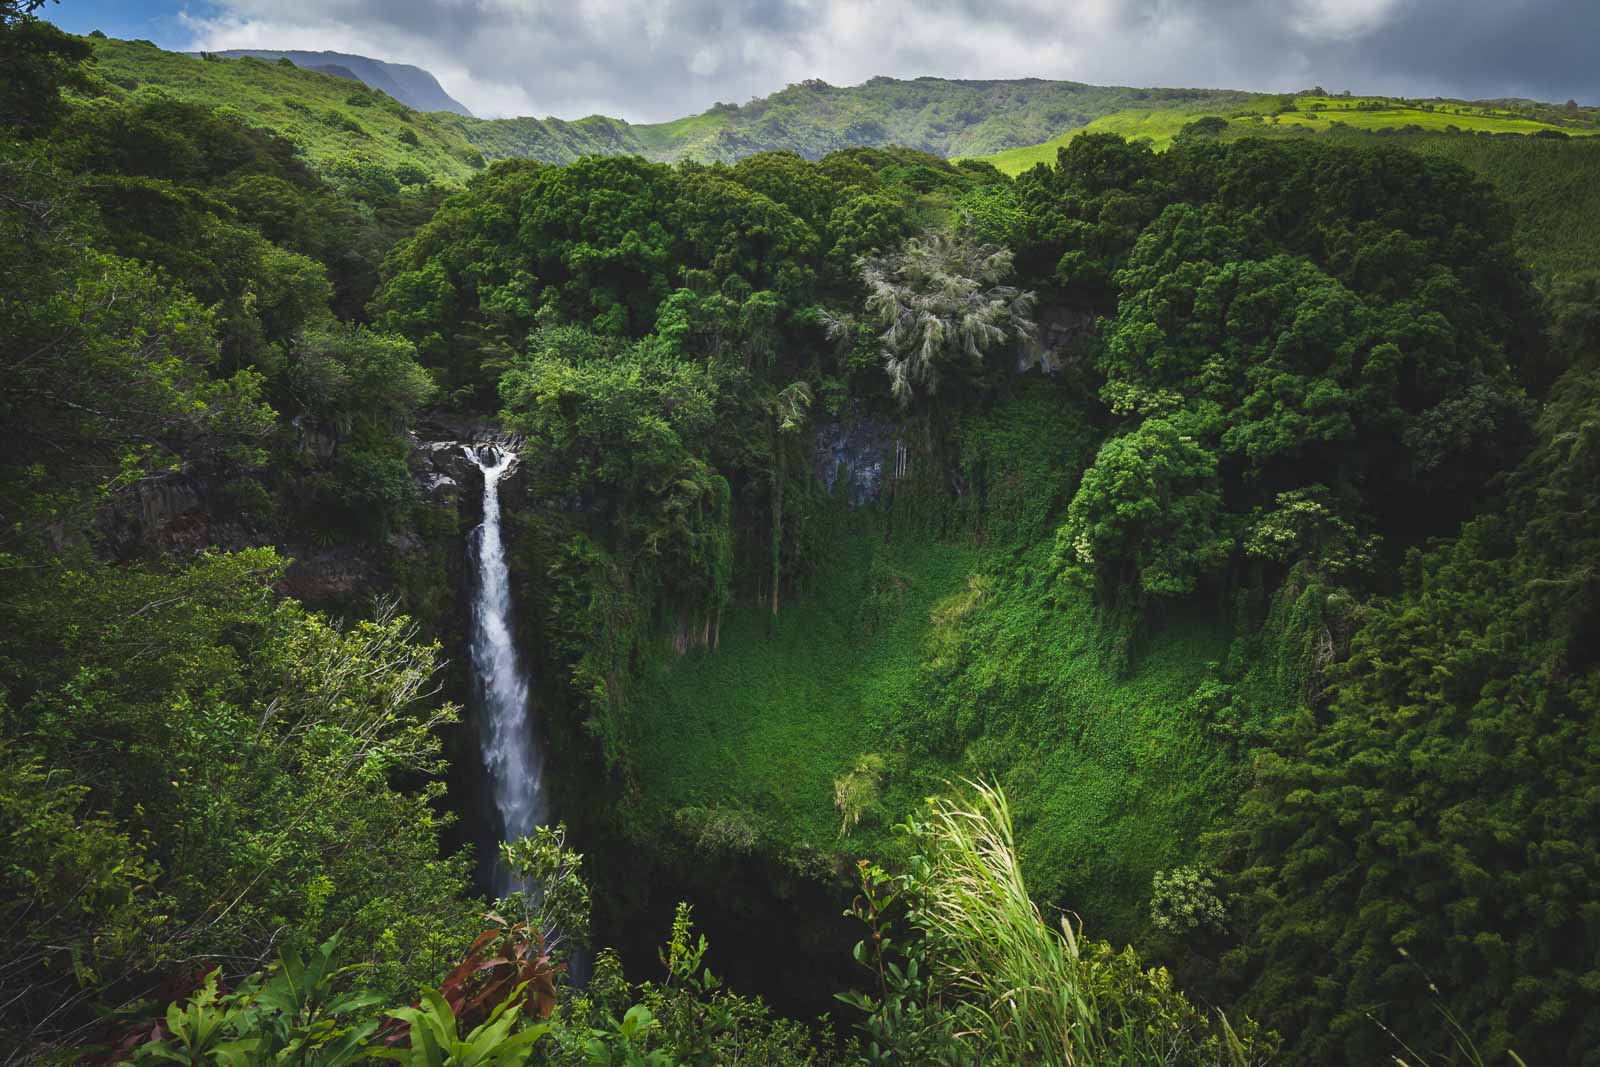 Where to stay in Maui Hana